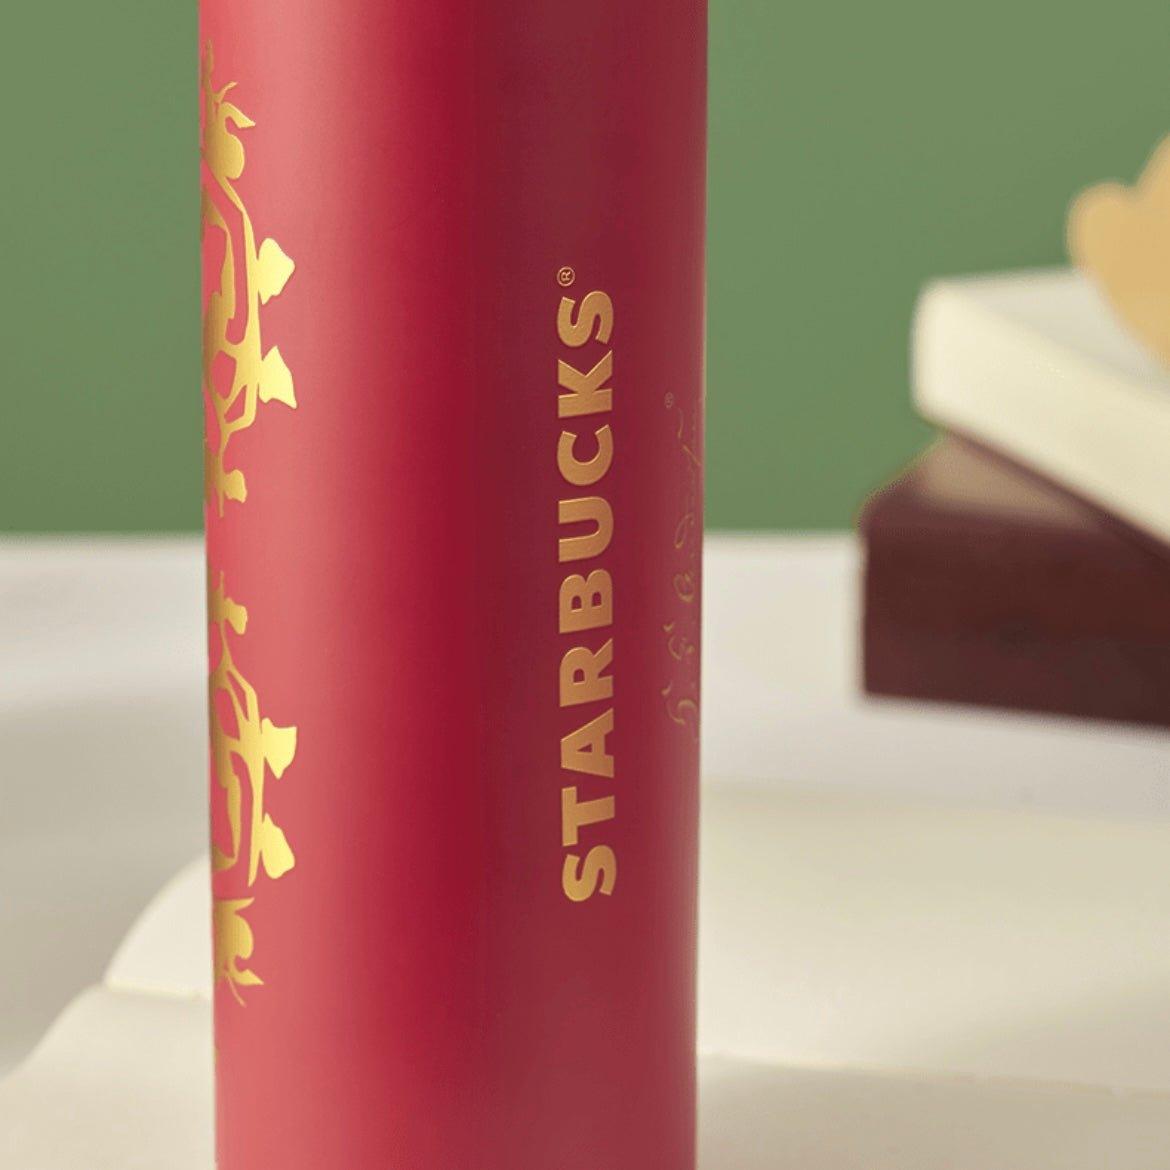 Starbucks 500ml/1oz Paper-cutting Travelling Cup (with Temperature digital display) - Ann Ann Starbucks